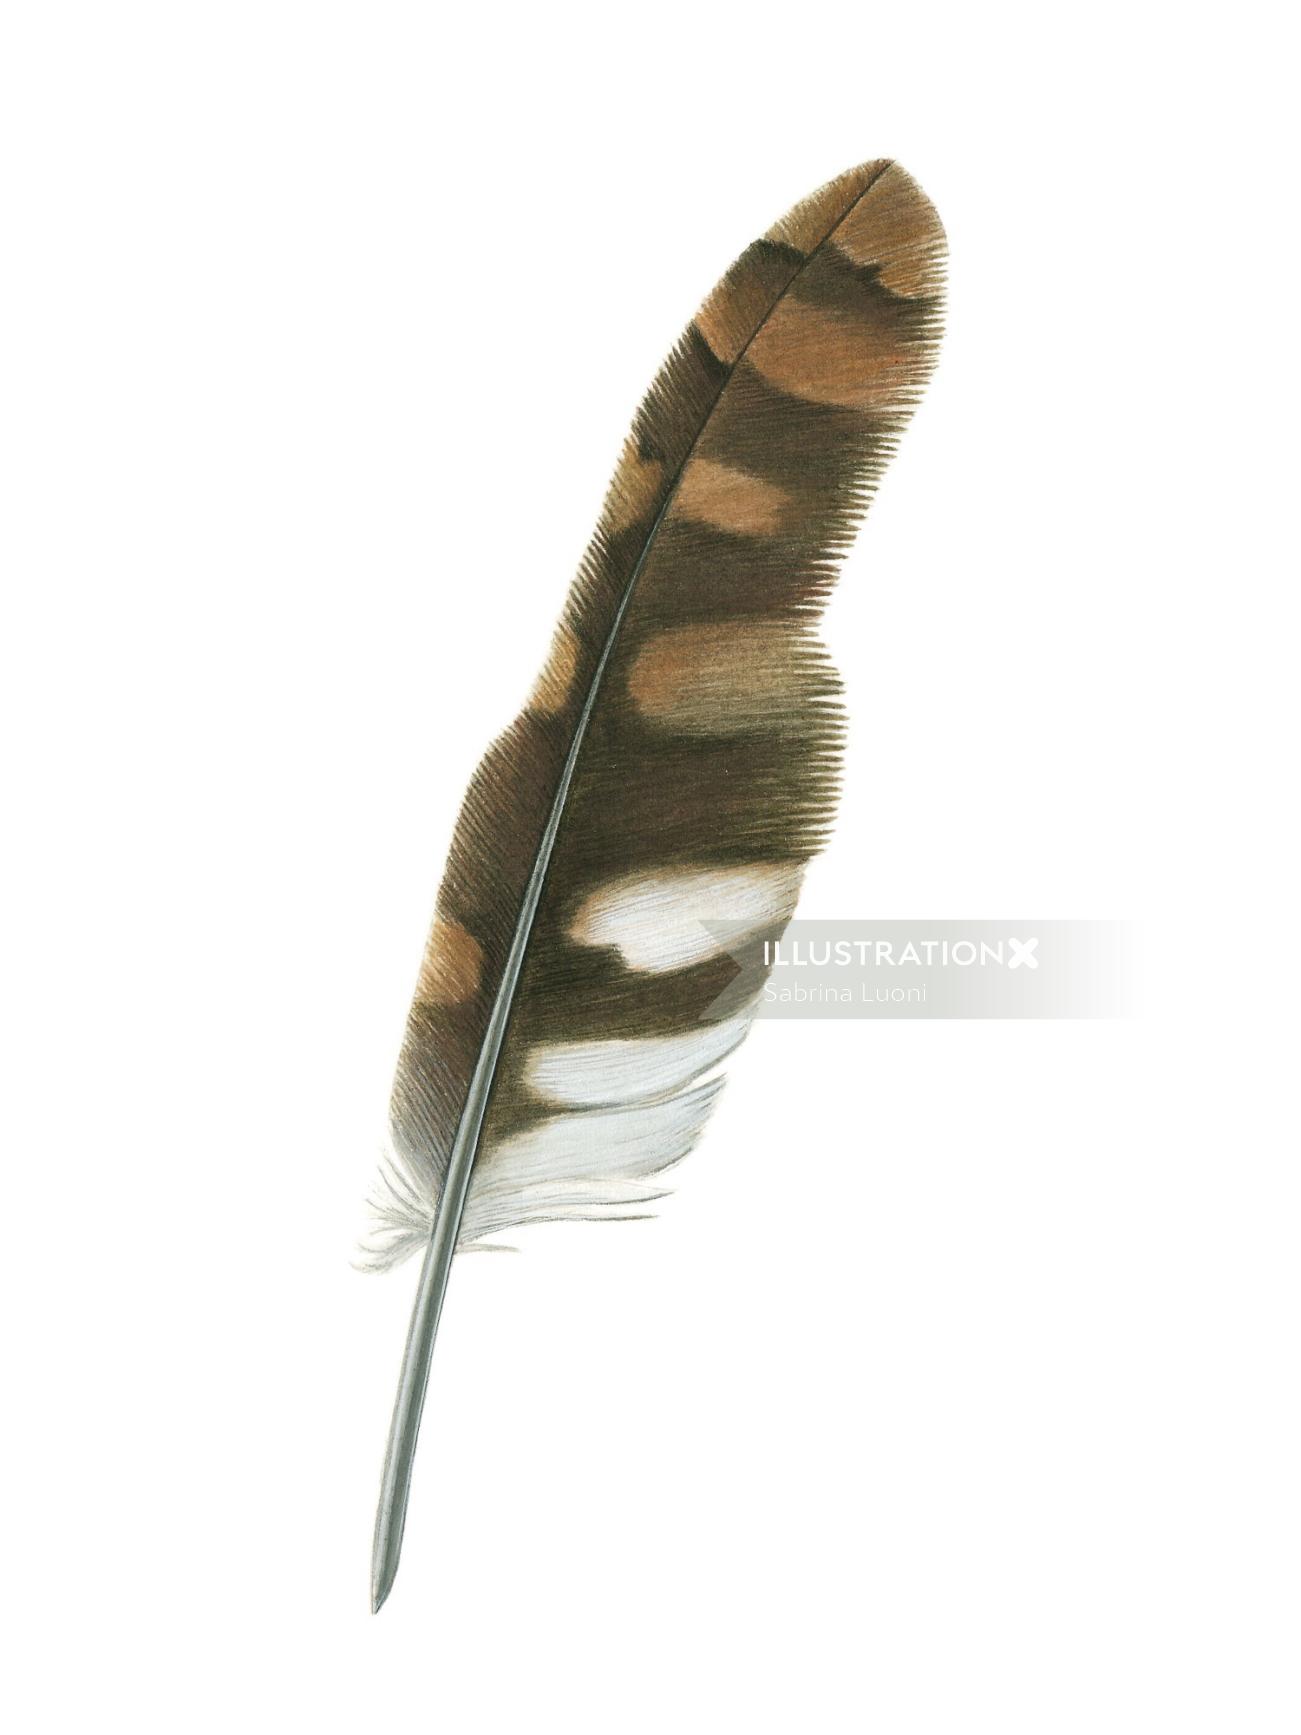 Feather of Tawny Owl Bird 